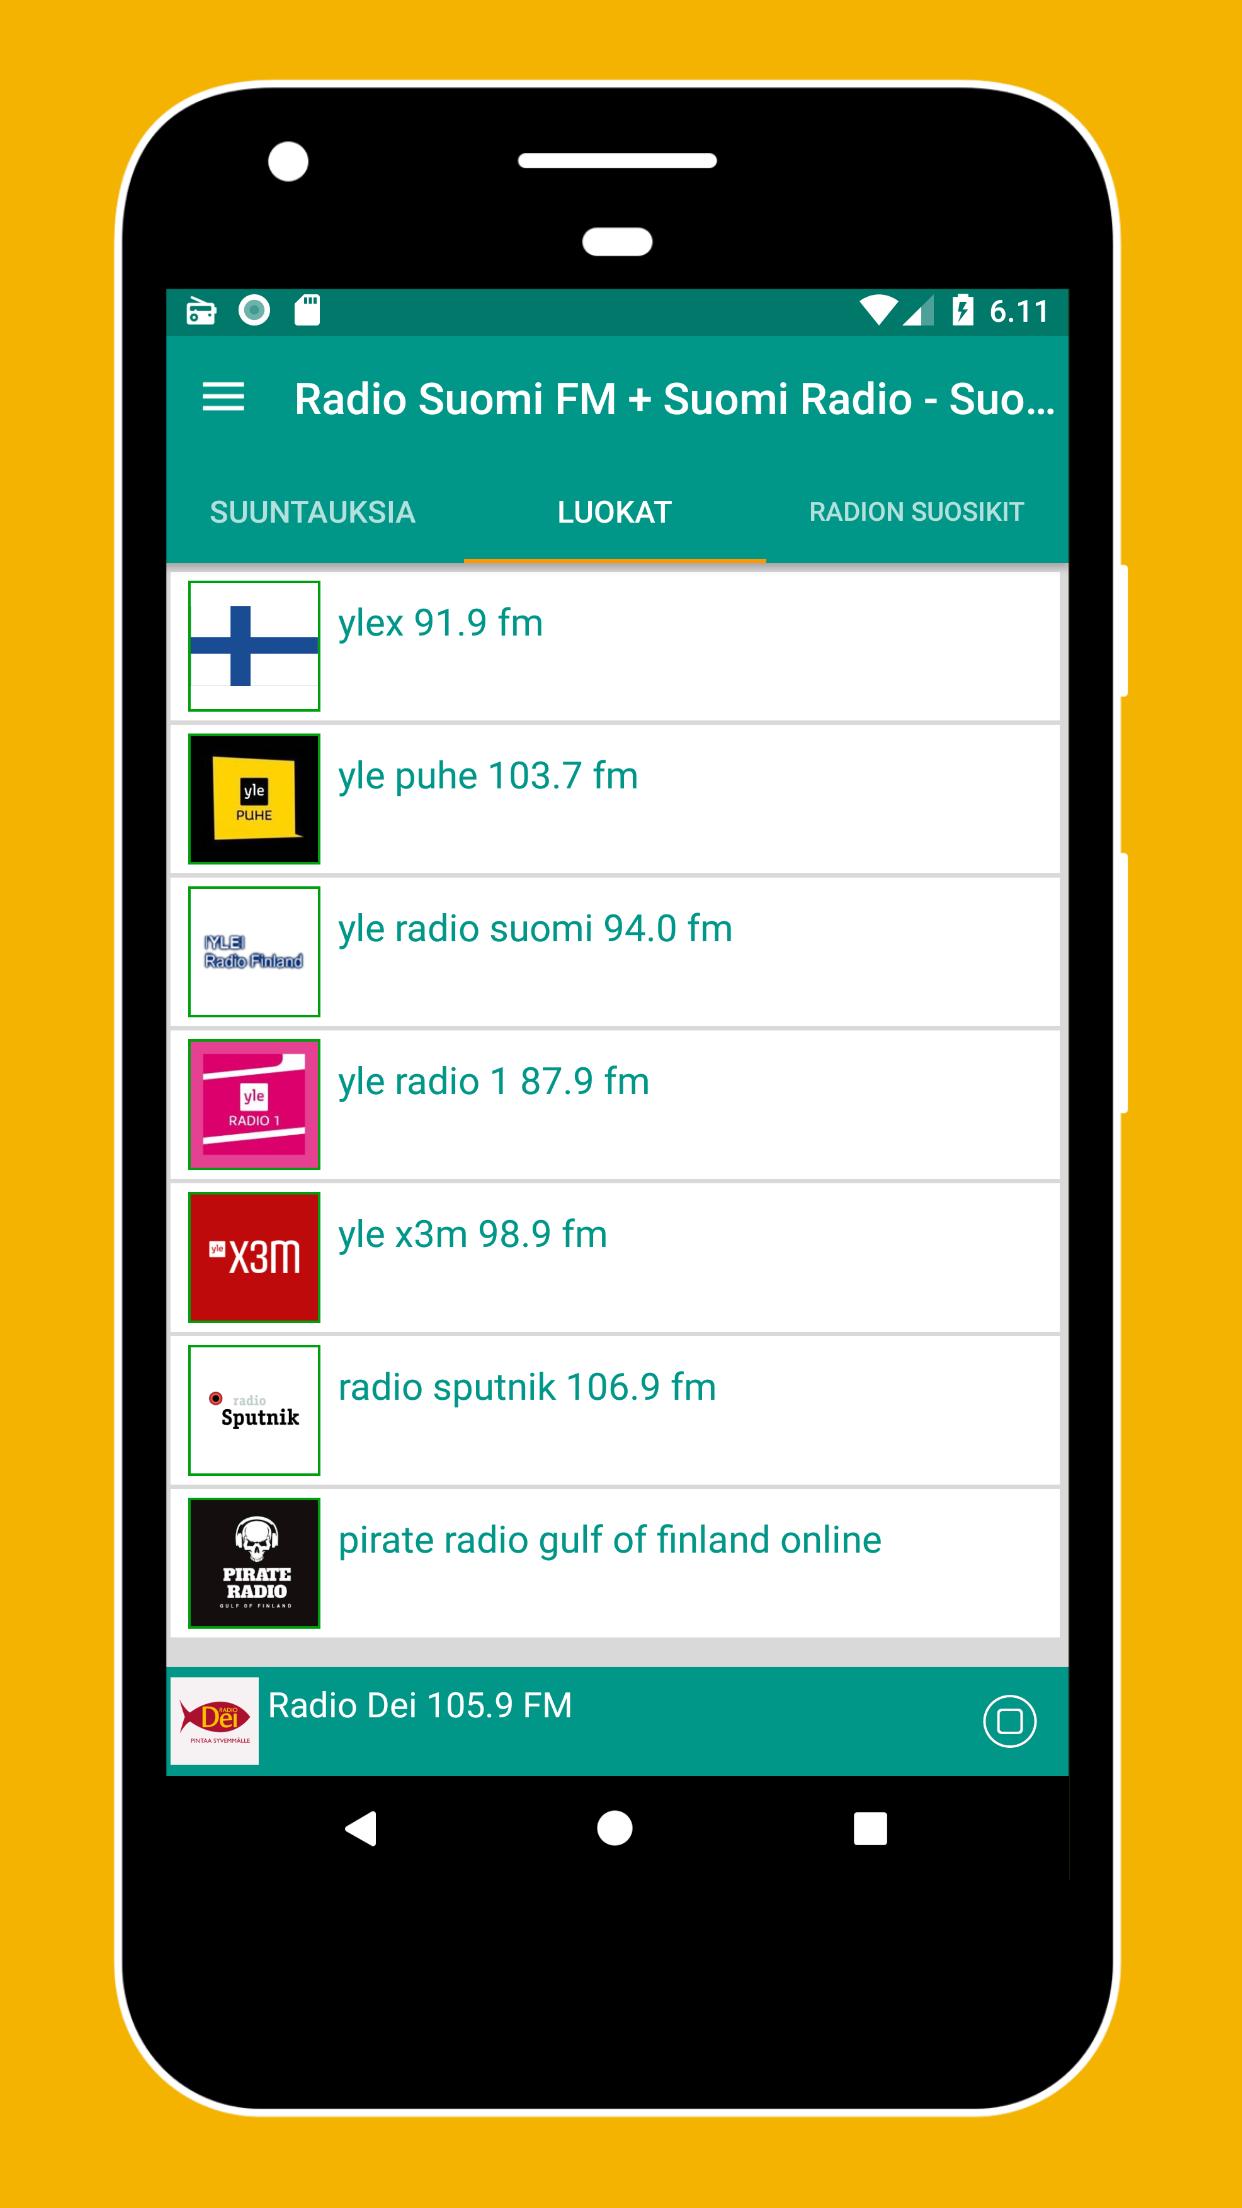 Radio Finland - Finnish Radio Stations - DAB Radio  - APK Download